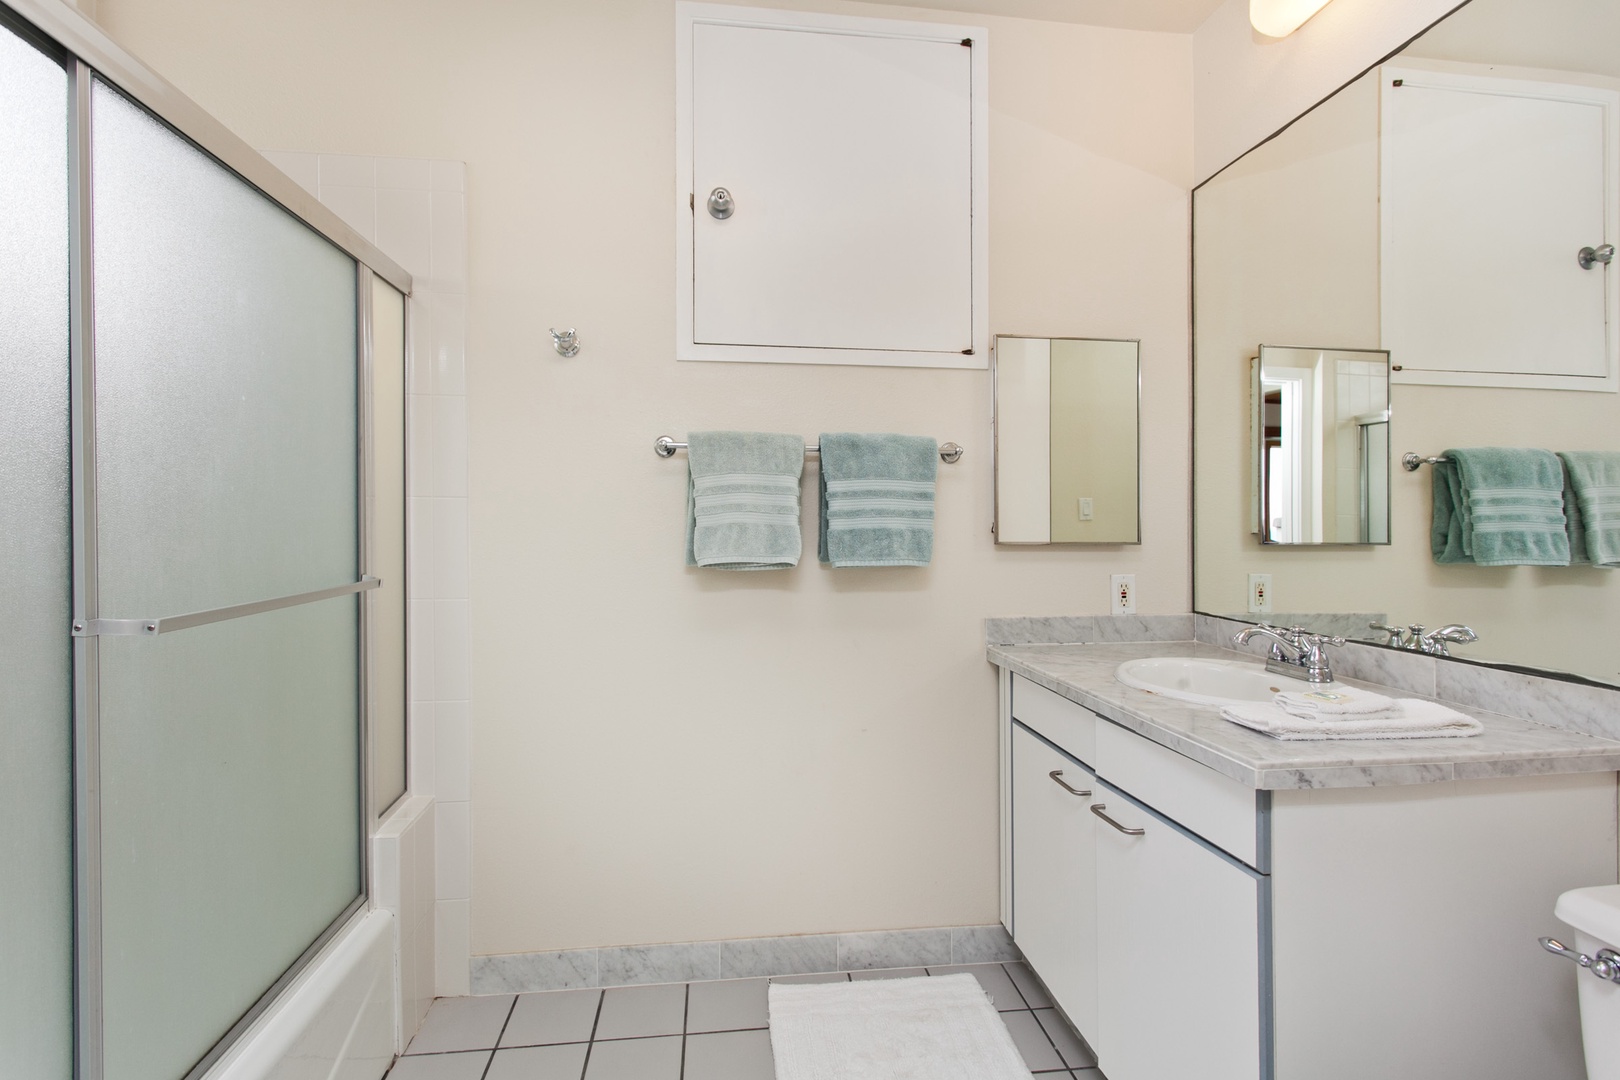 Kailua Vacation Rentals, Hale Kolea* - The shared guest bathroom has a walk-in shower/tub combination.